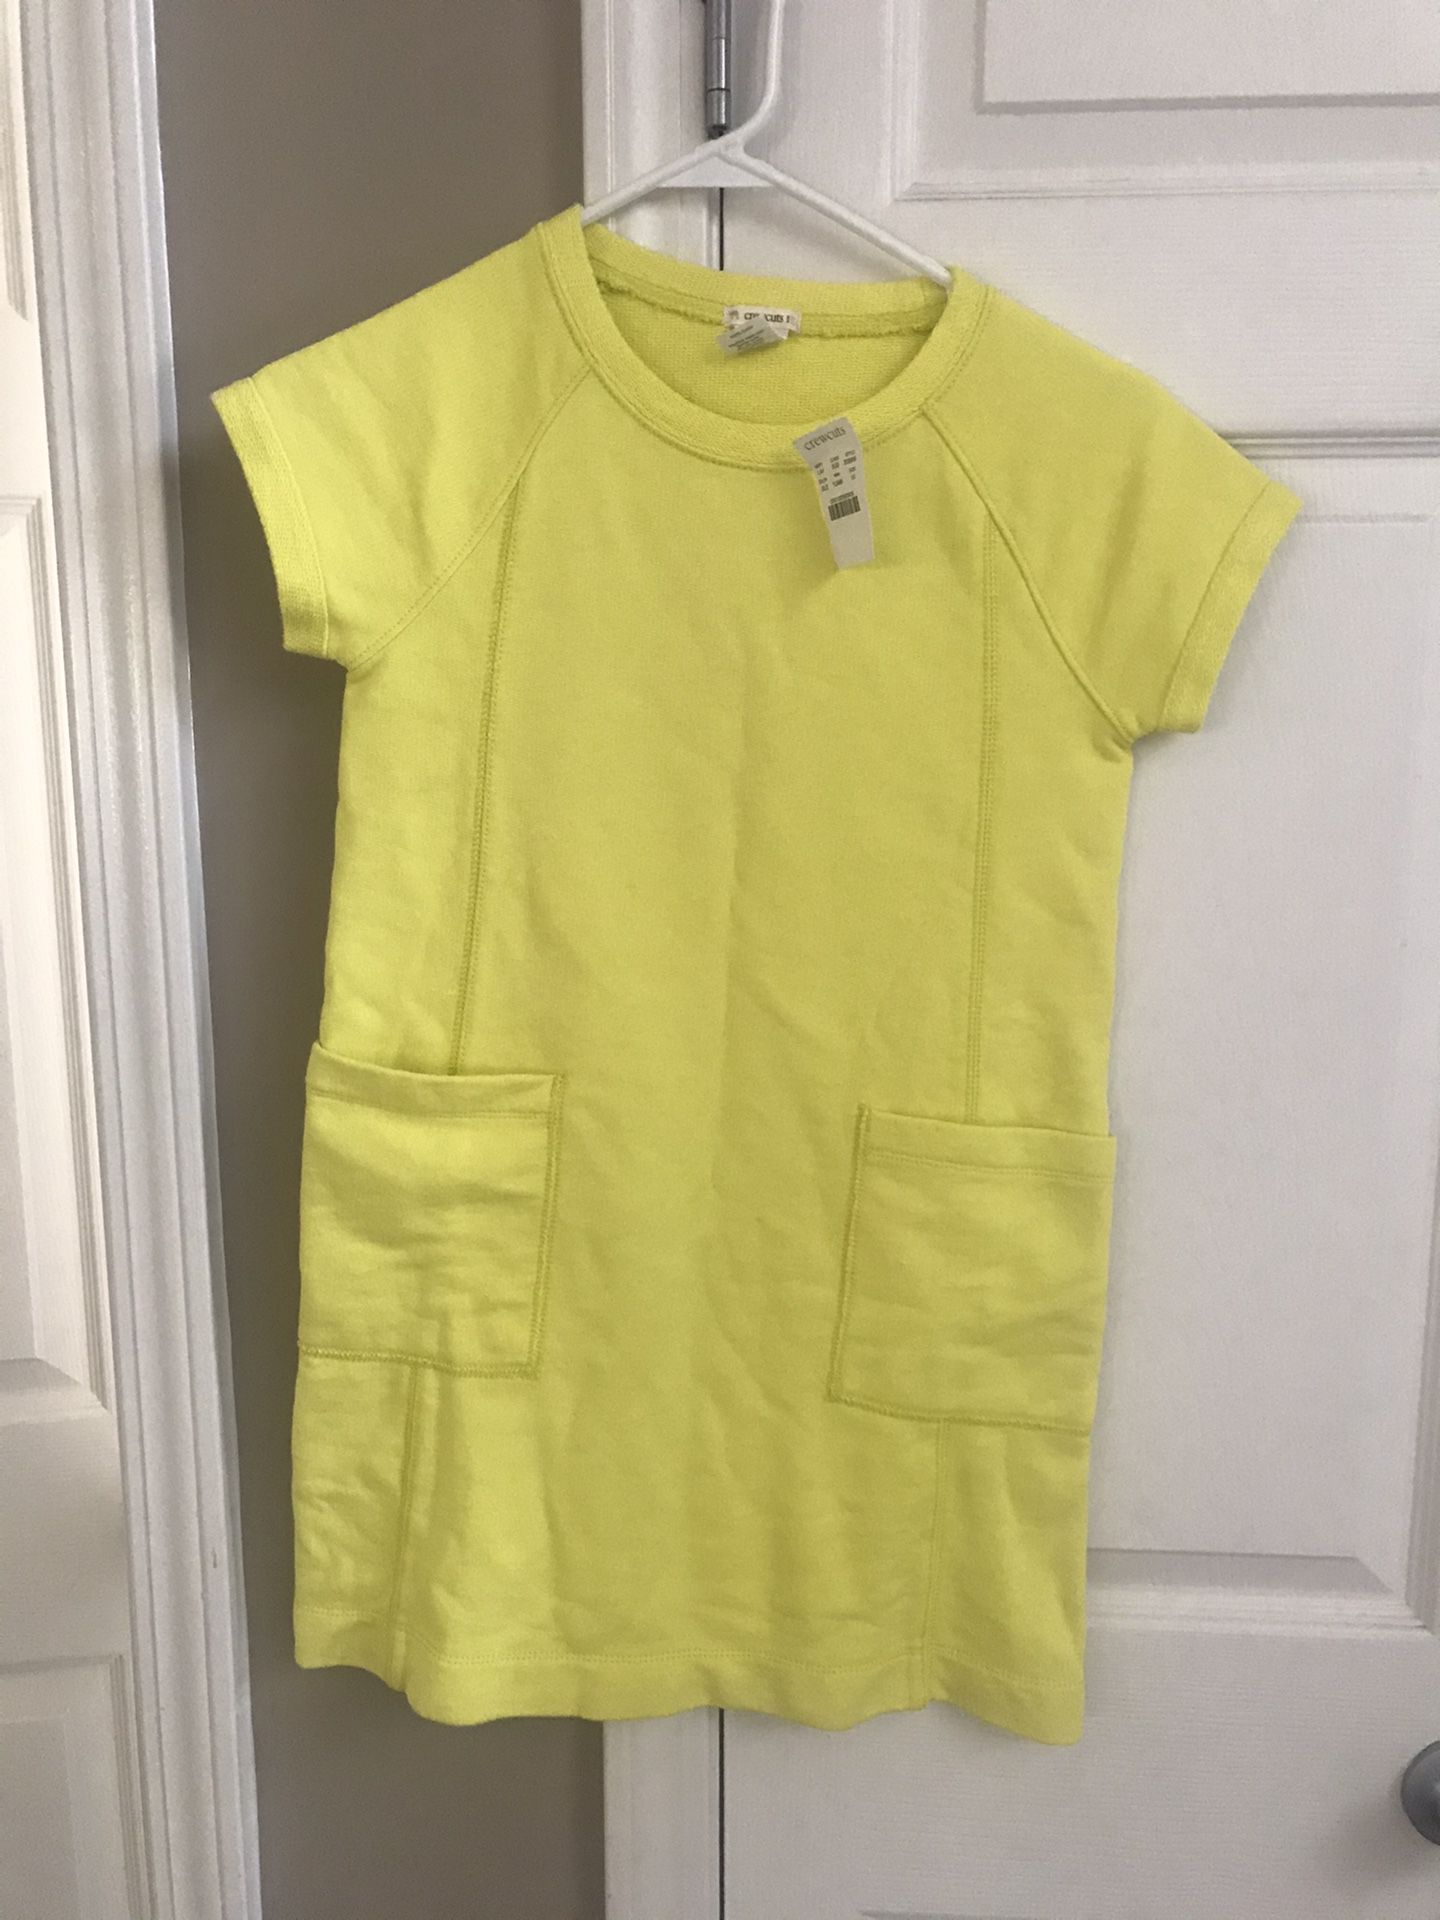 Crewcuts Yellow Sweatshirt Dress Size 10